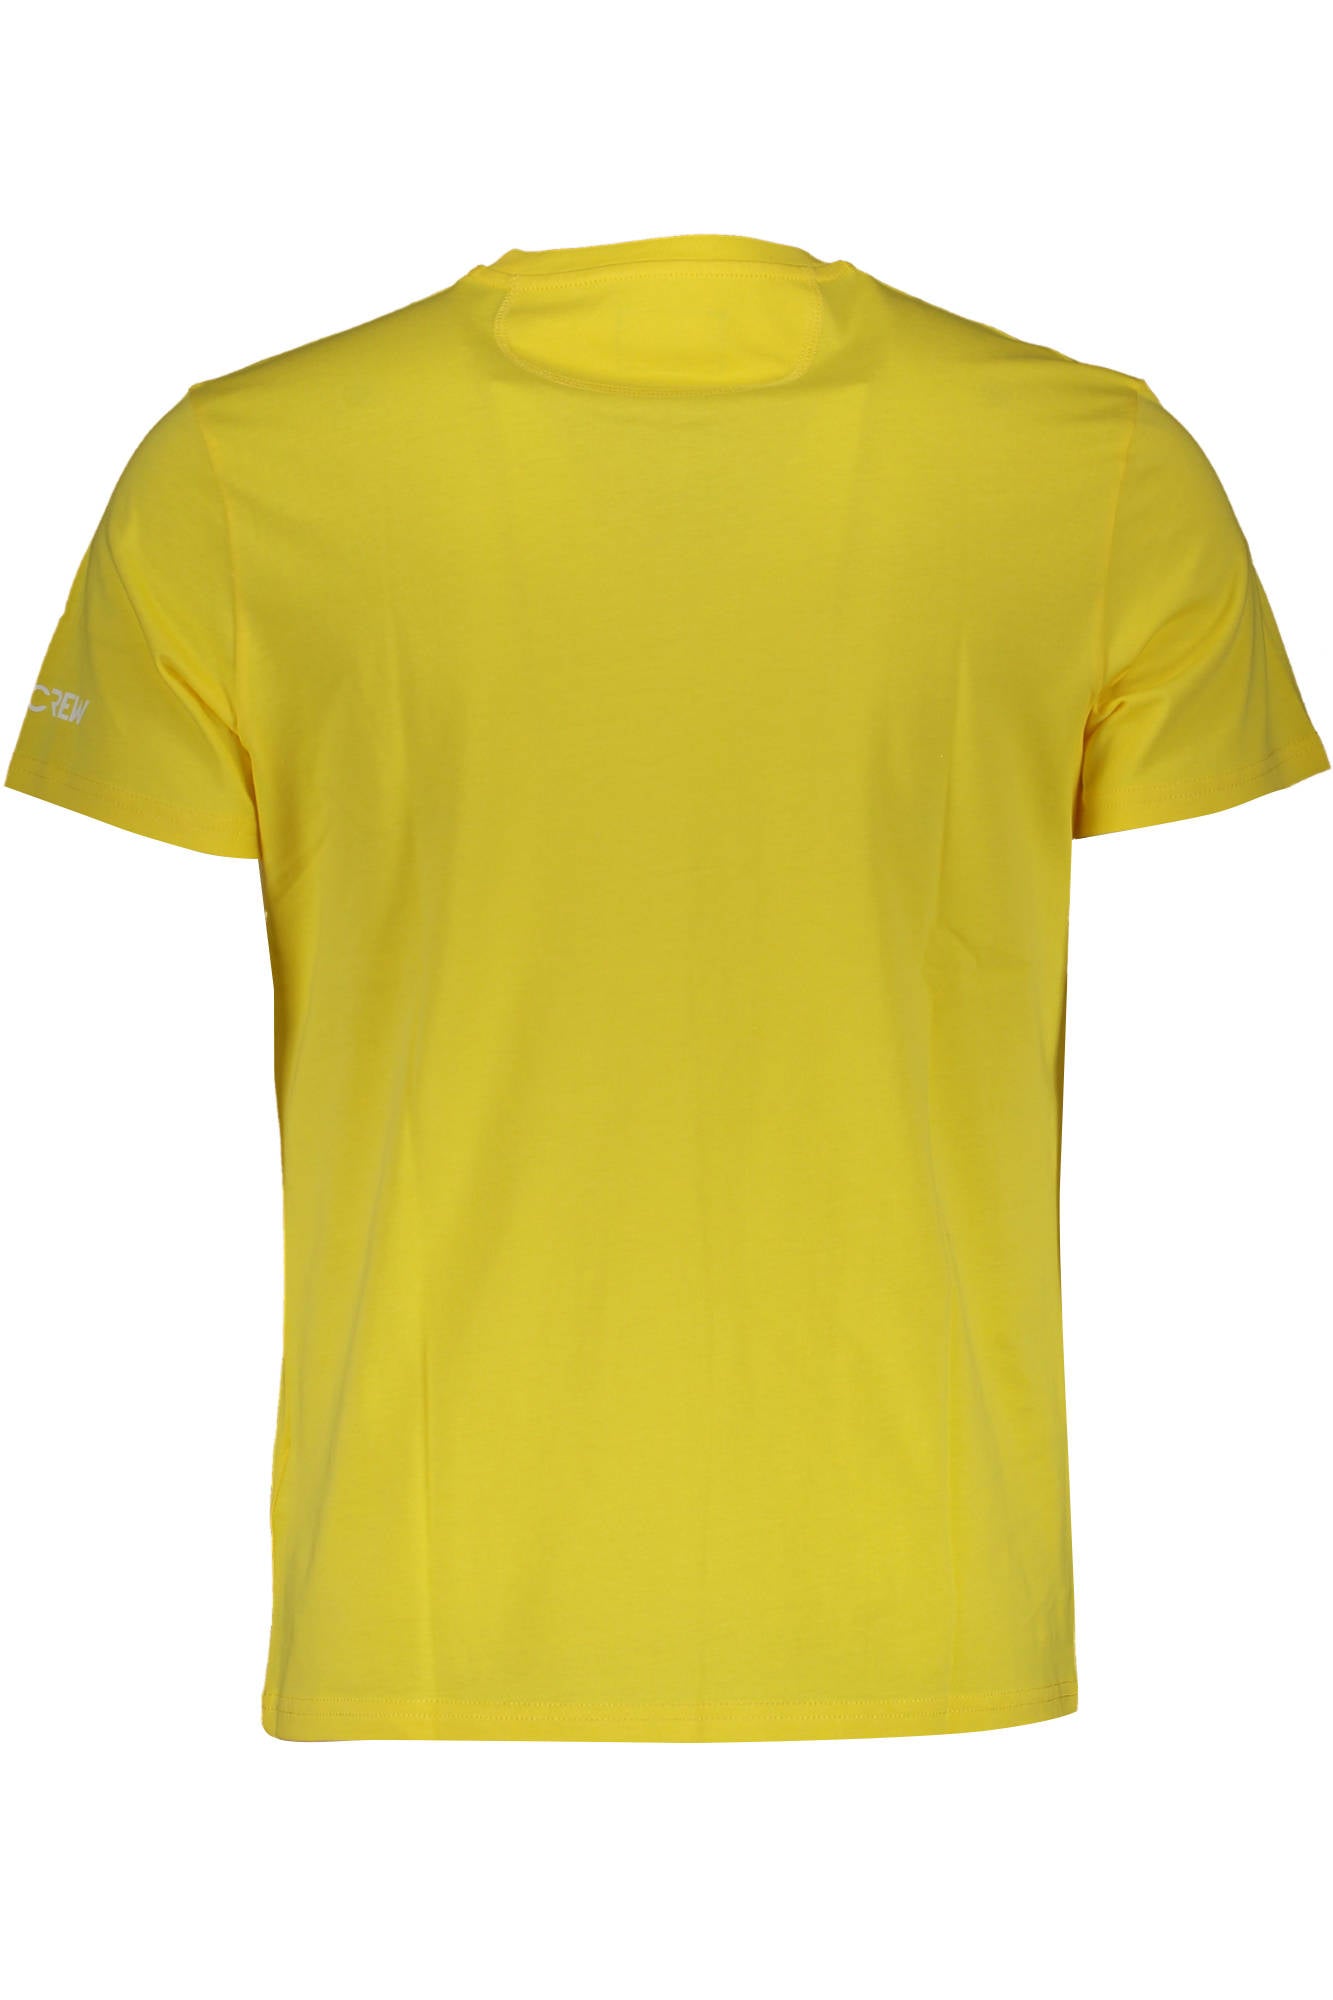 La Martina Yellow T-Shirt - Fizigo